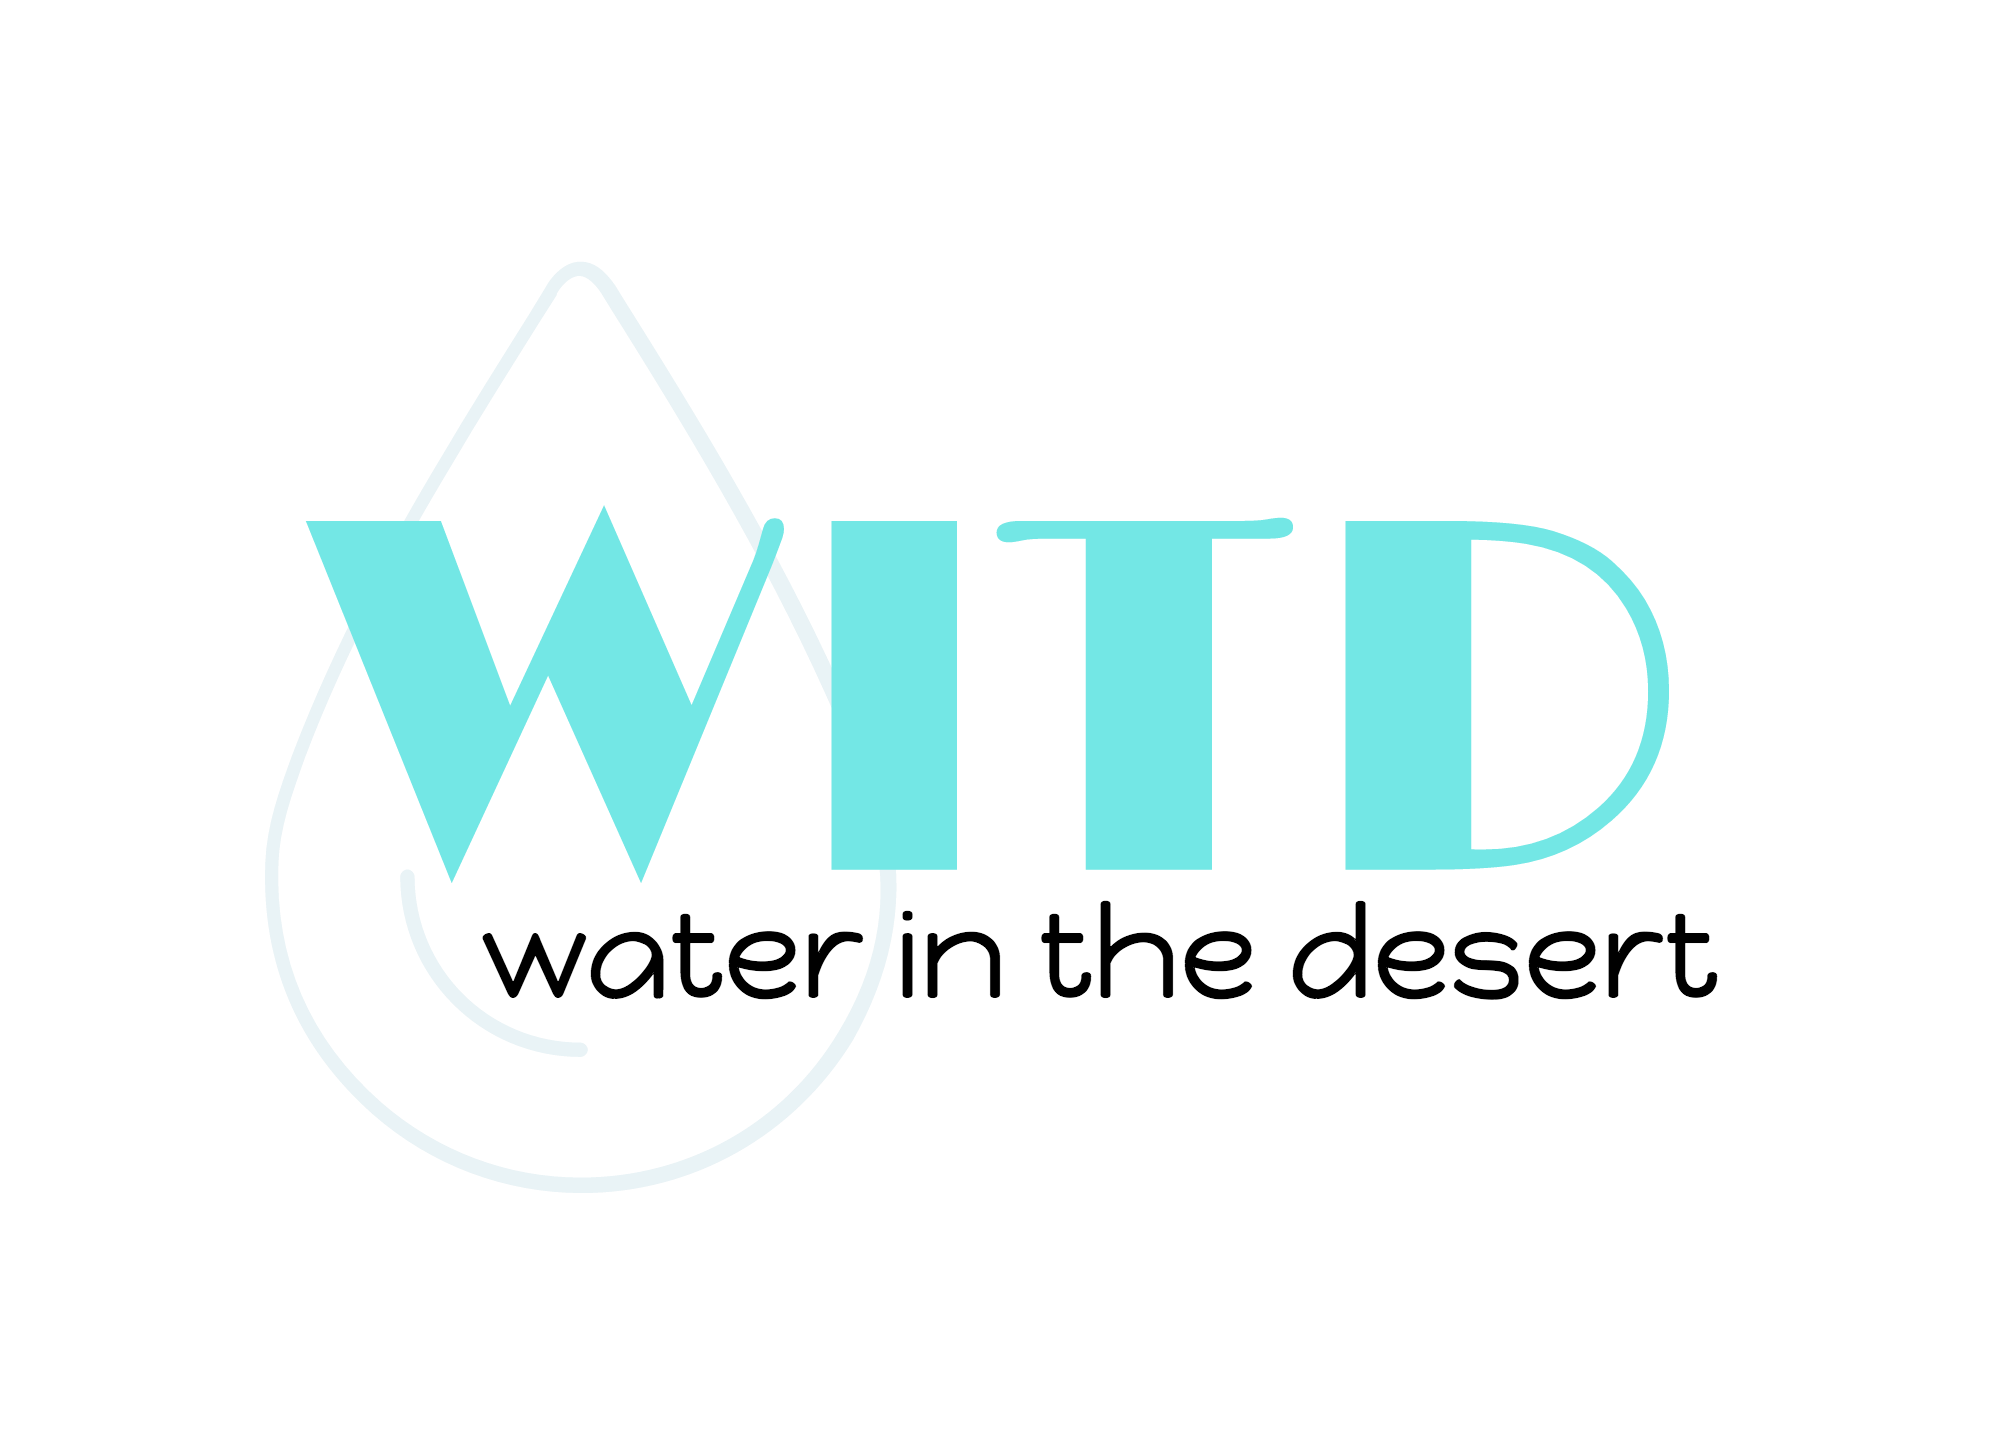 WITD-logo.png